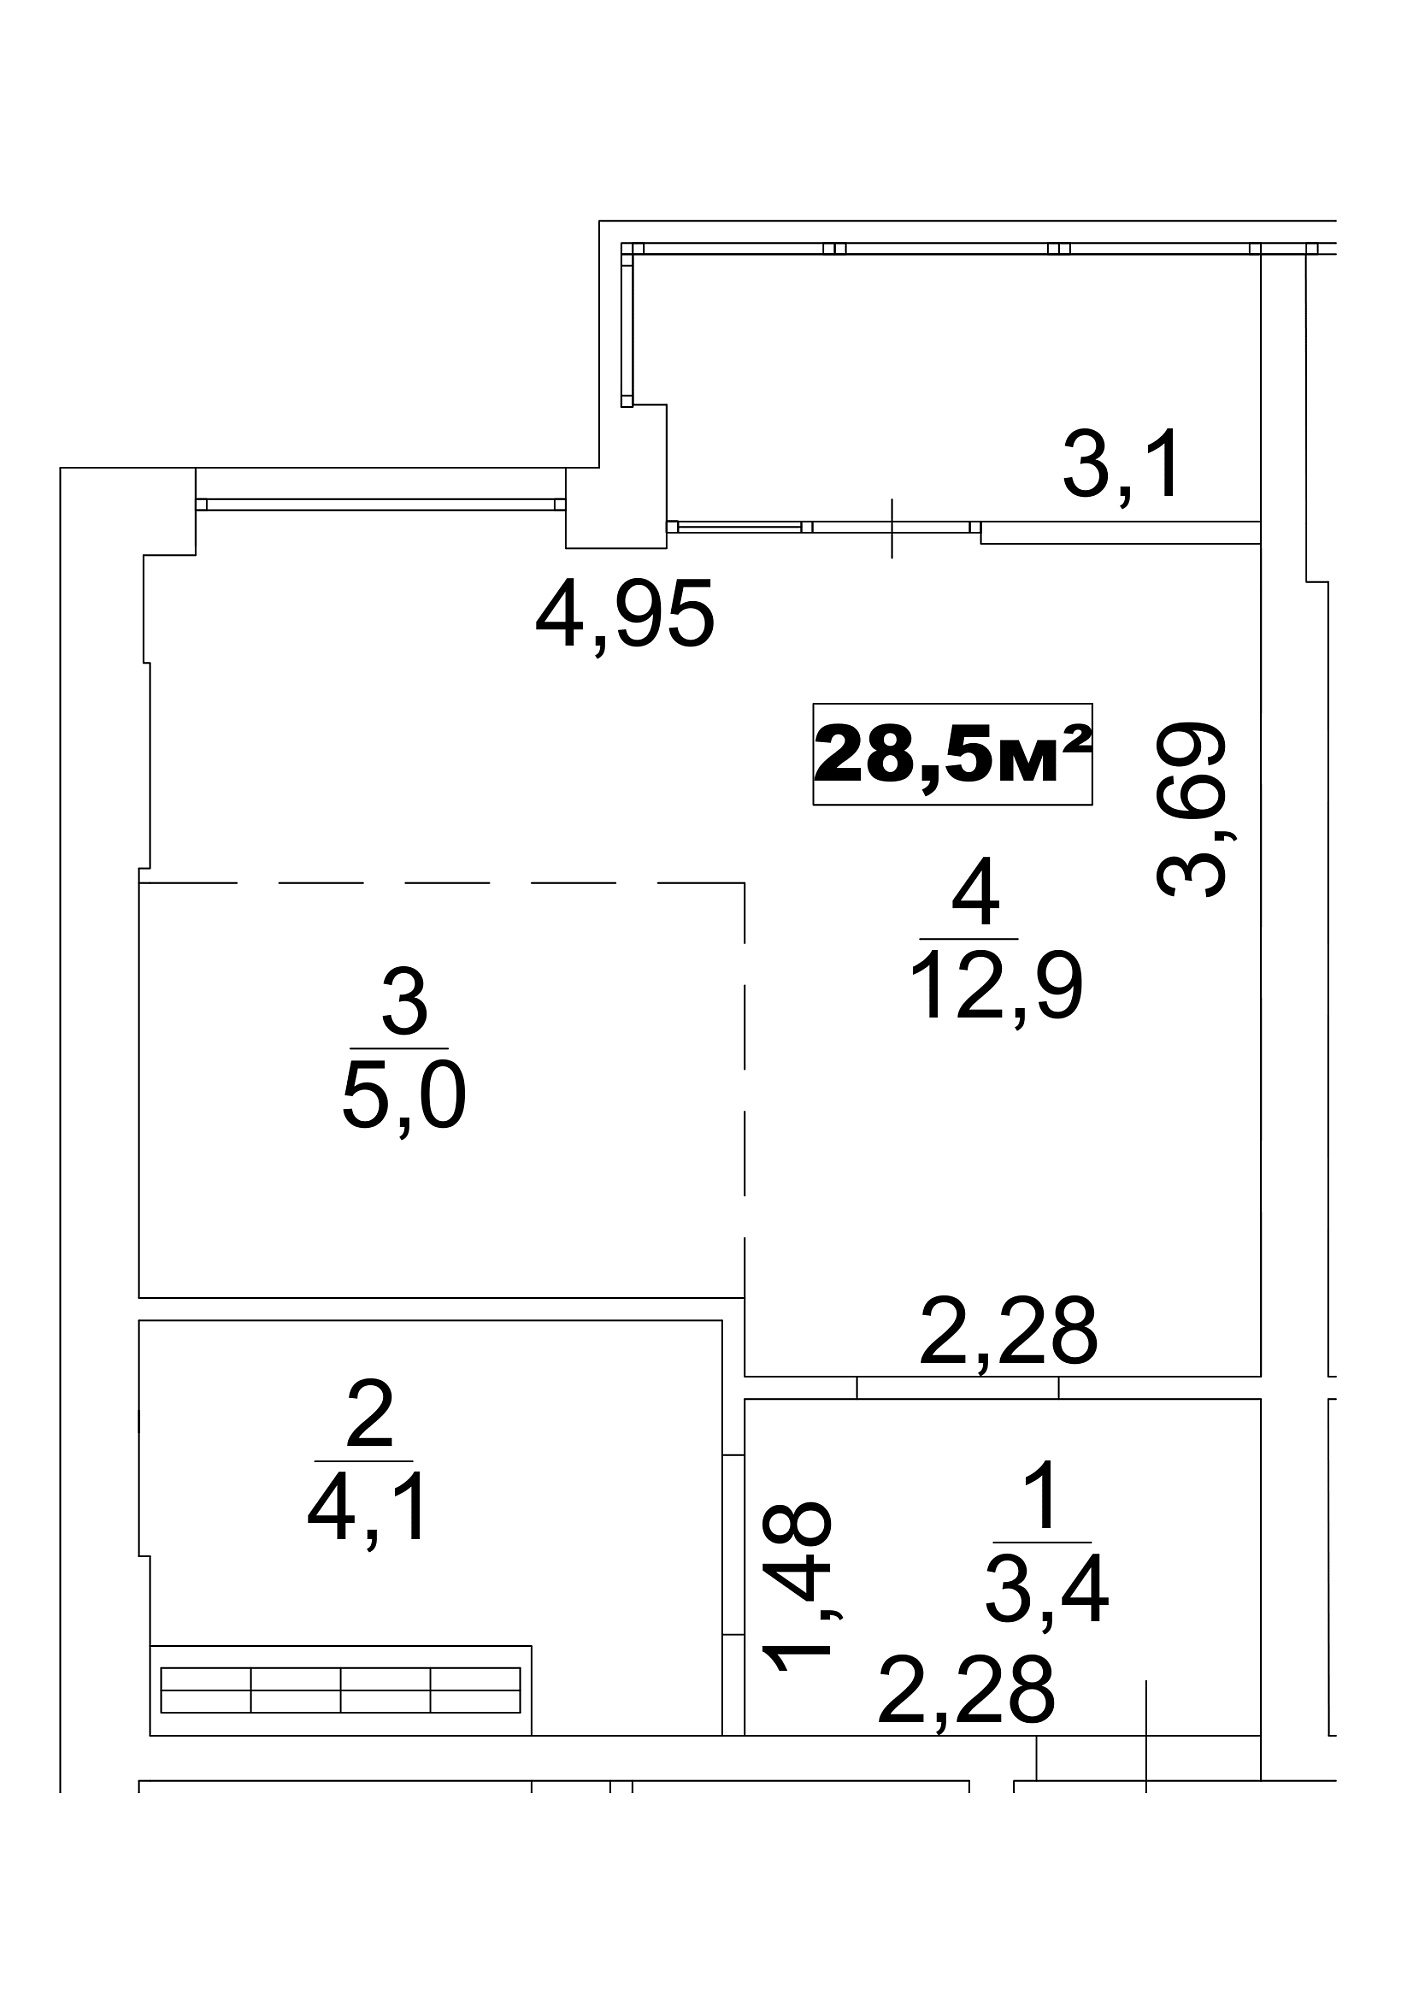 Planning Smart flats area 28.5m2, AB-13-09/0072б.